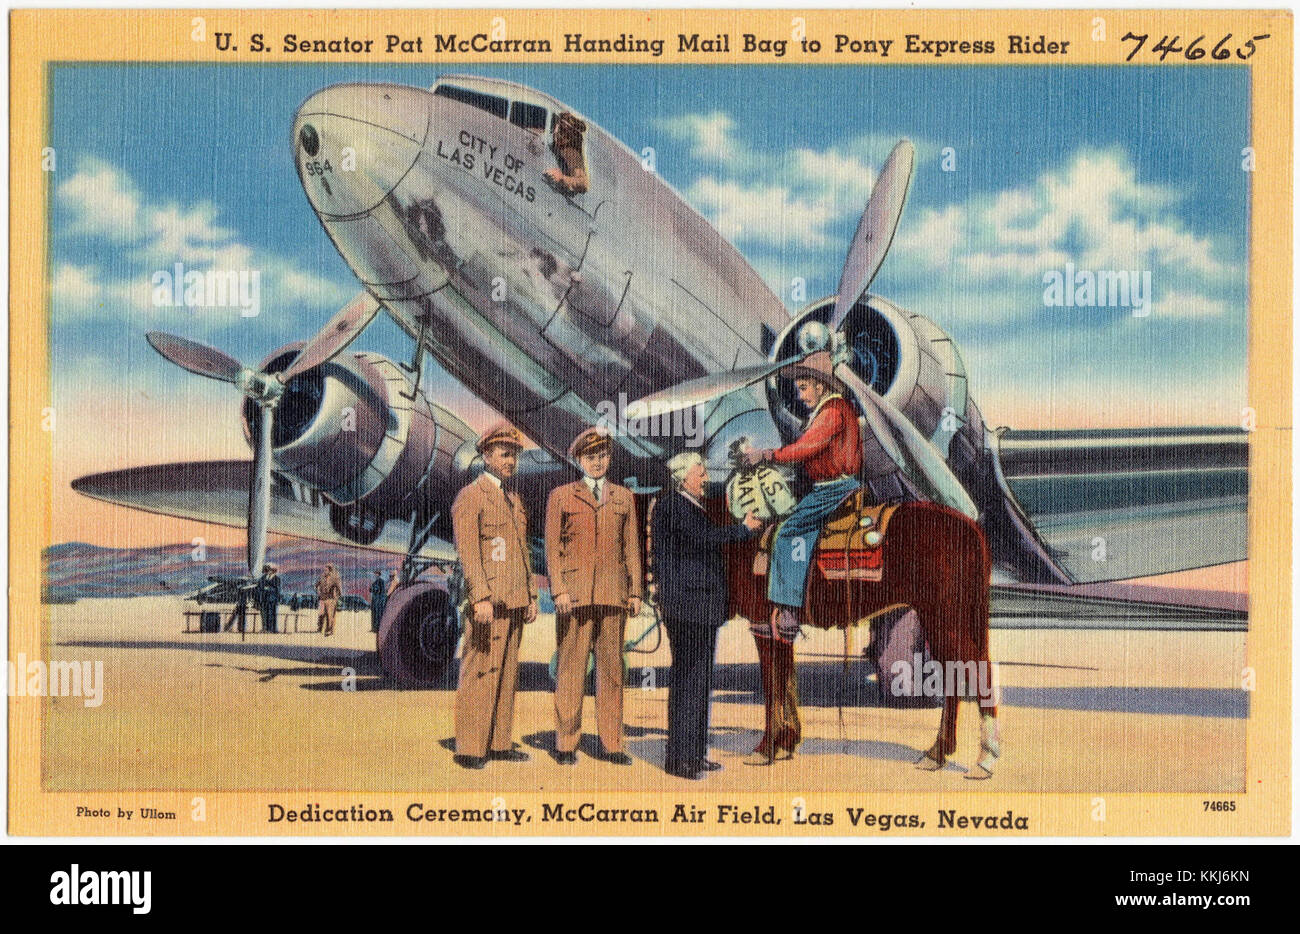 U.S. Senator Pat McCarran handing mail bag to Pony Express rider, Dedication Ceremony, McCarran Air Field, Las Vegas, Nevada (74665) Stock Photo